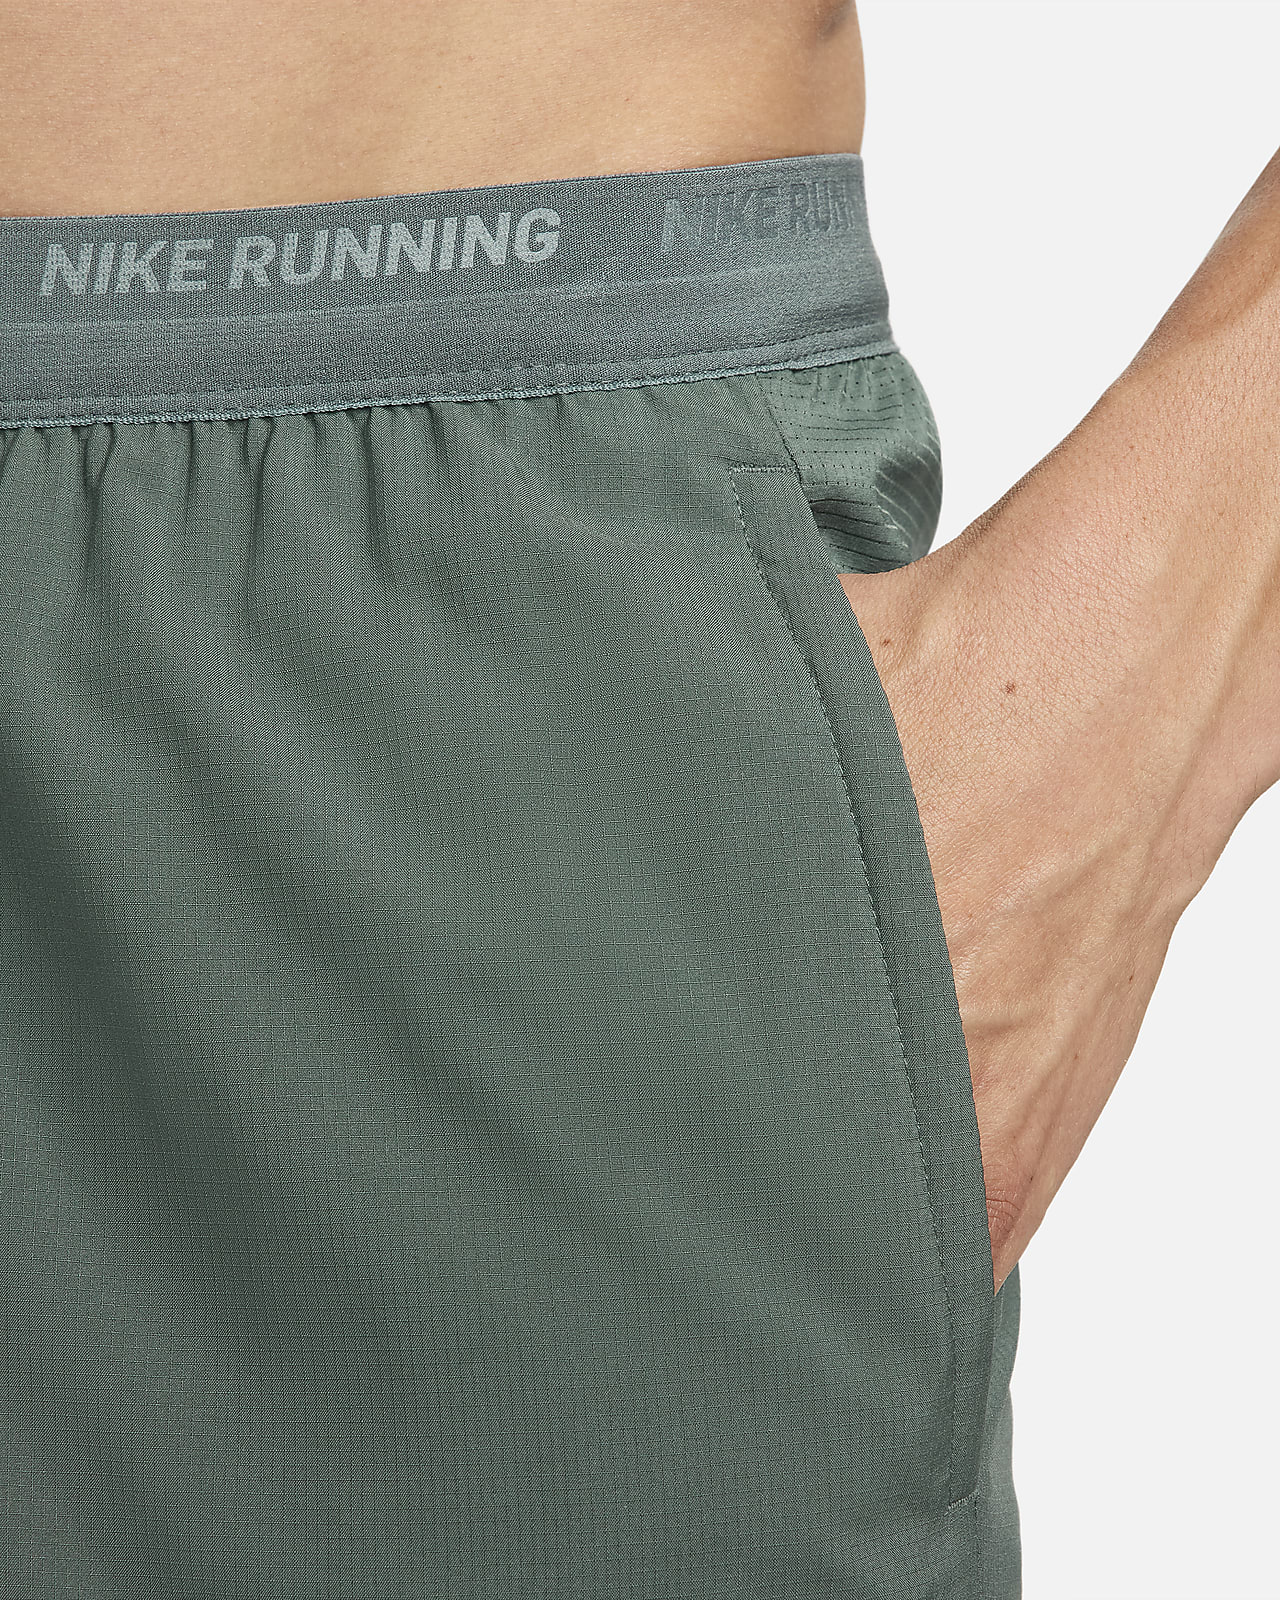 Nike 2-in-1 running shorts DRI-FIT RUN DIVISION STRIDE in dark green/ black